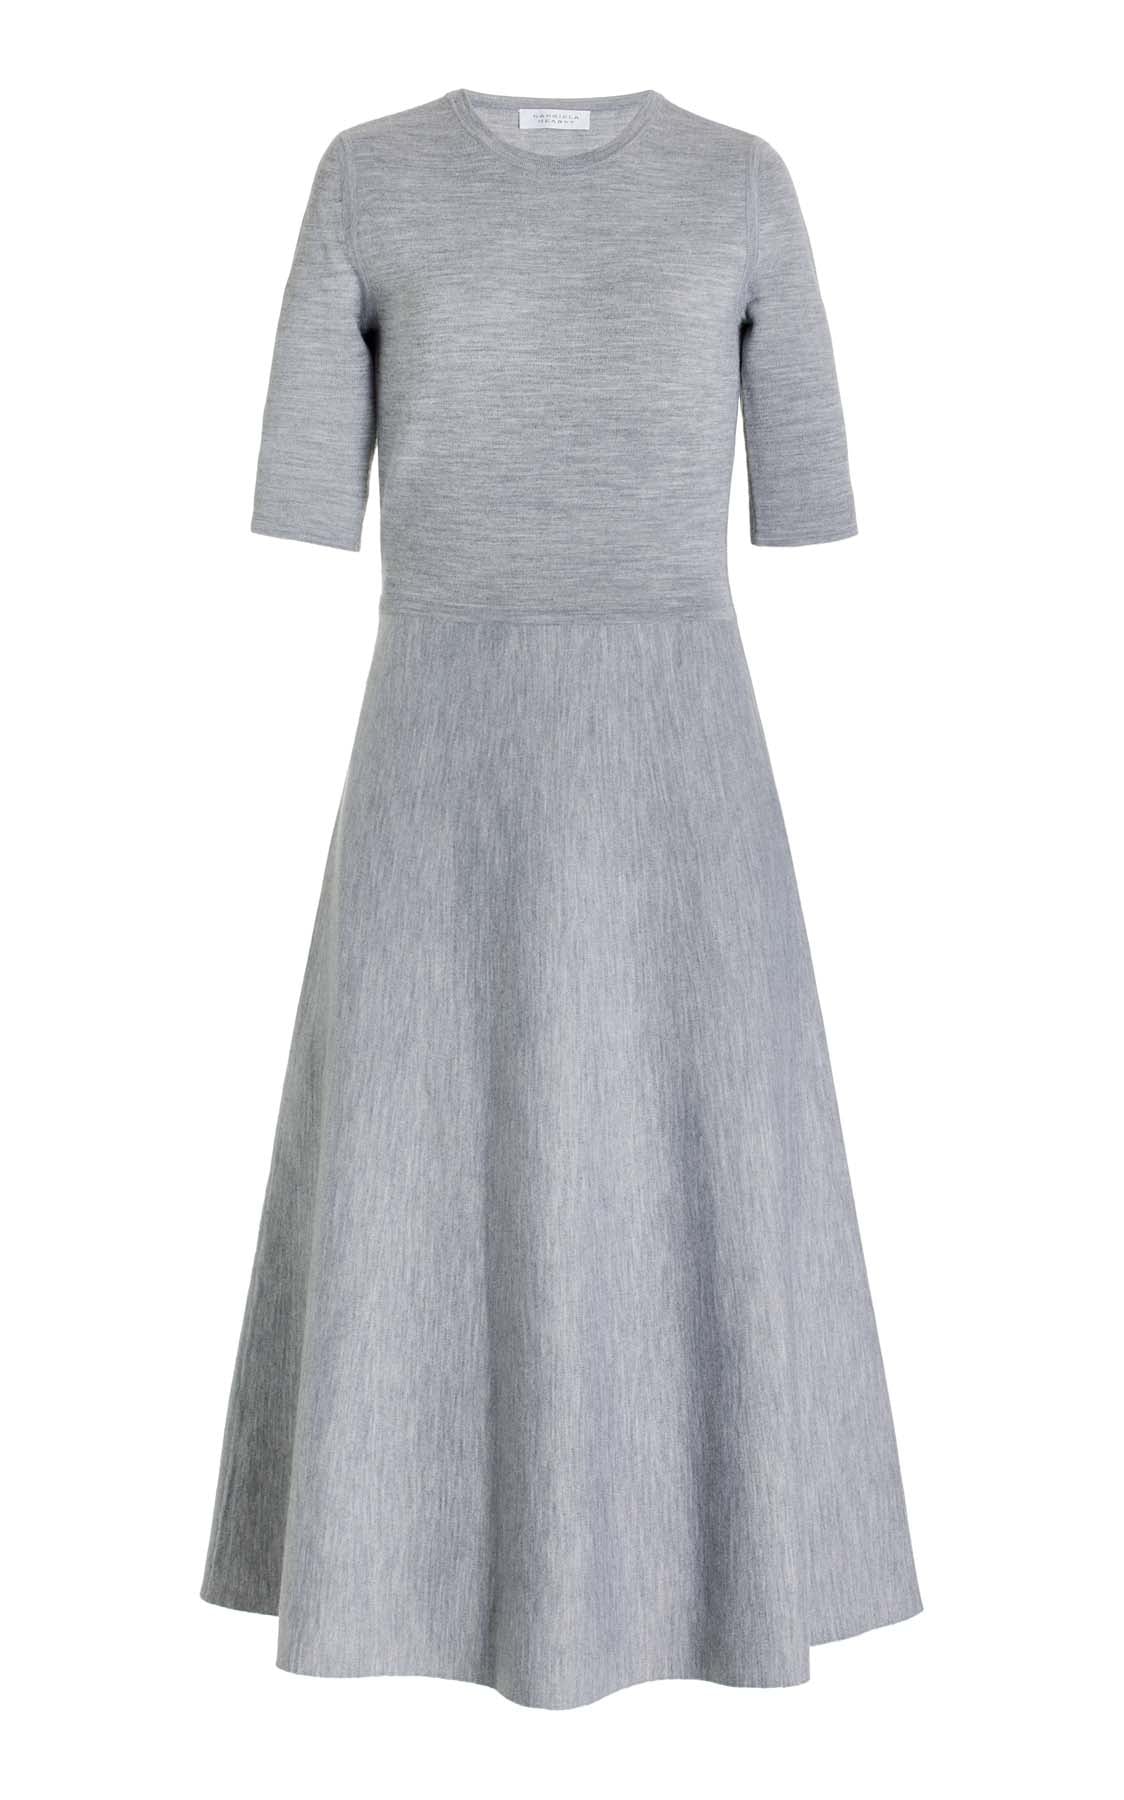 Seymore Knit Dress in Heather Grey Cashmere Silk Wool – Gabriela Hearst